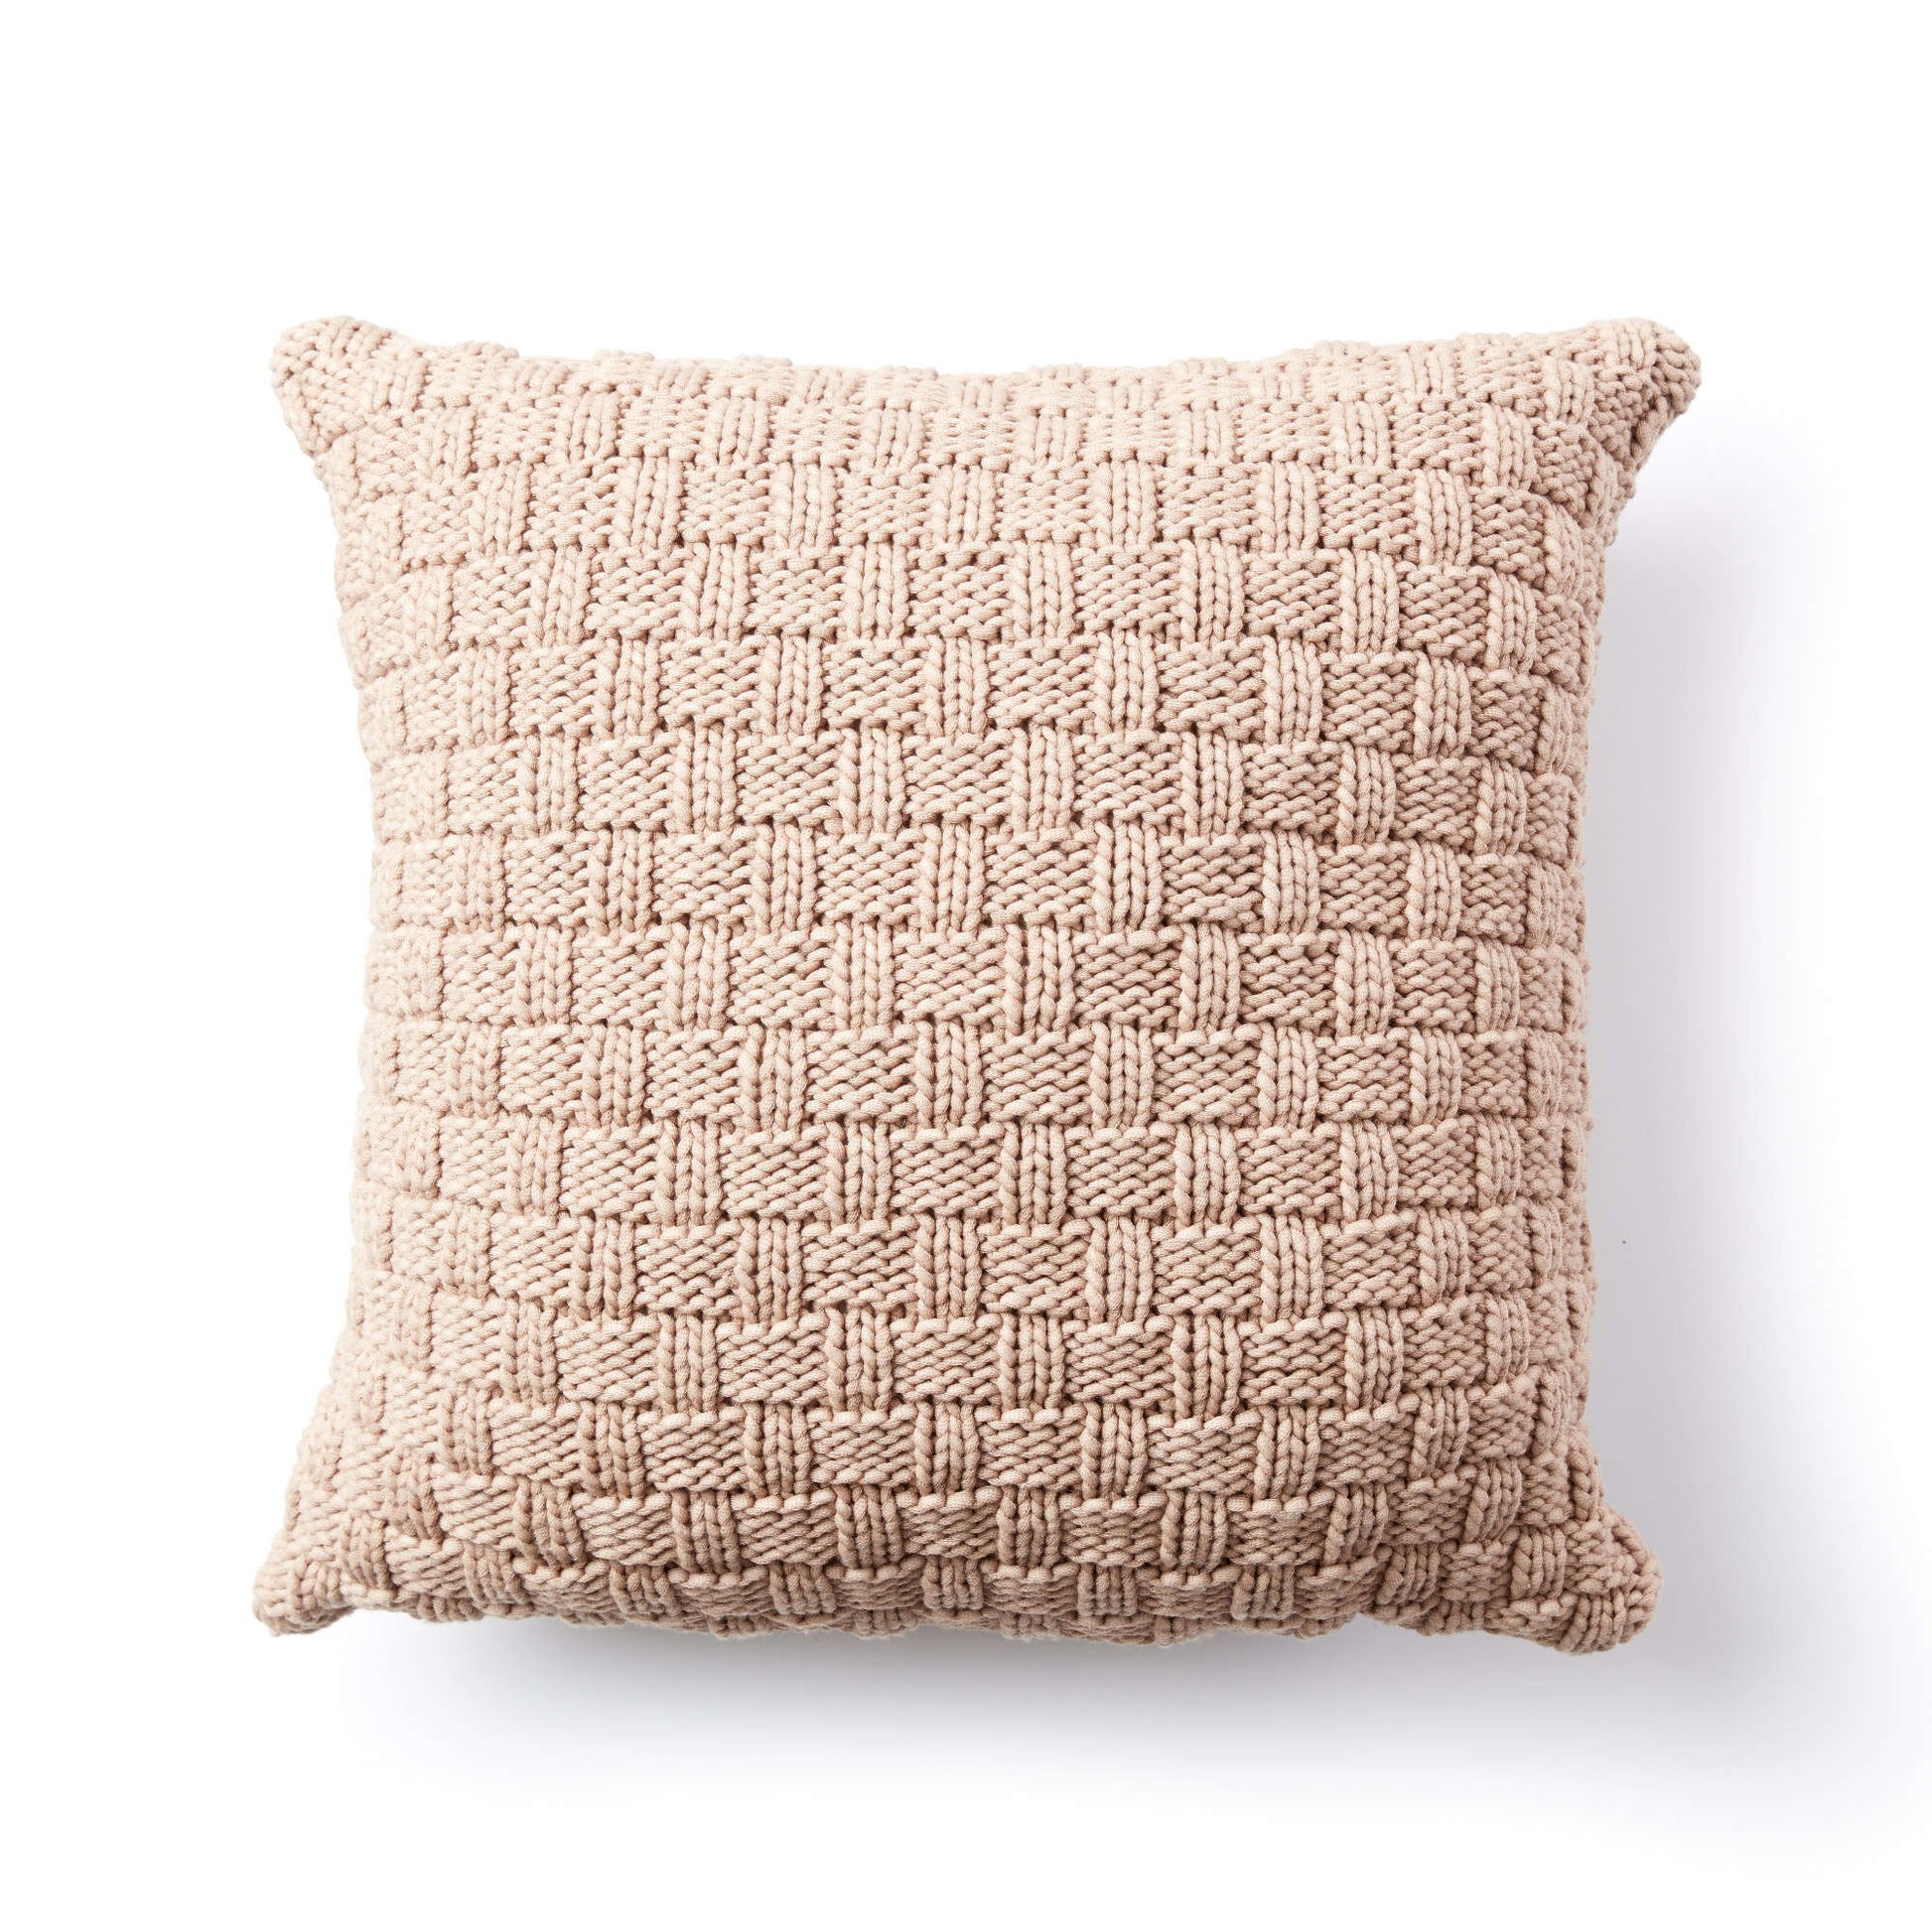 Free Bernat Basketweave Knit Pillow Pattern